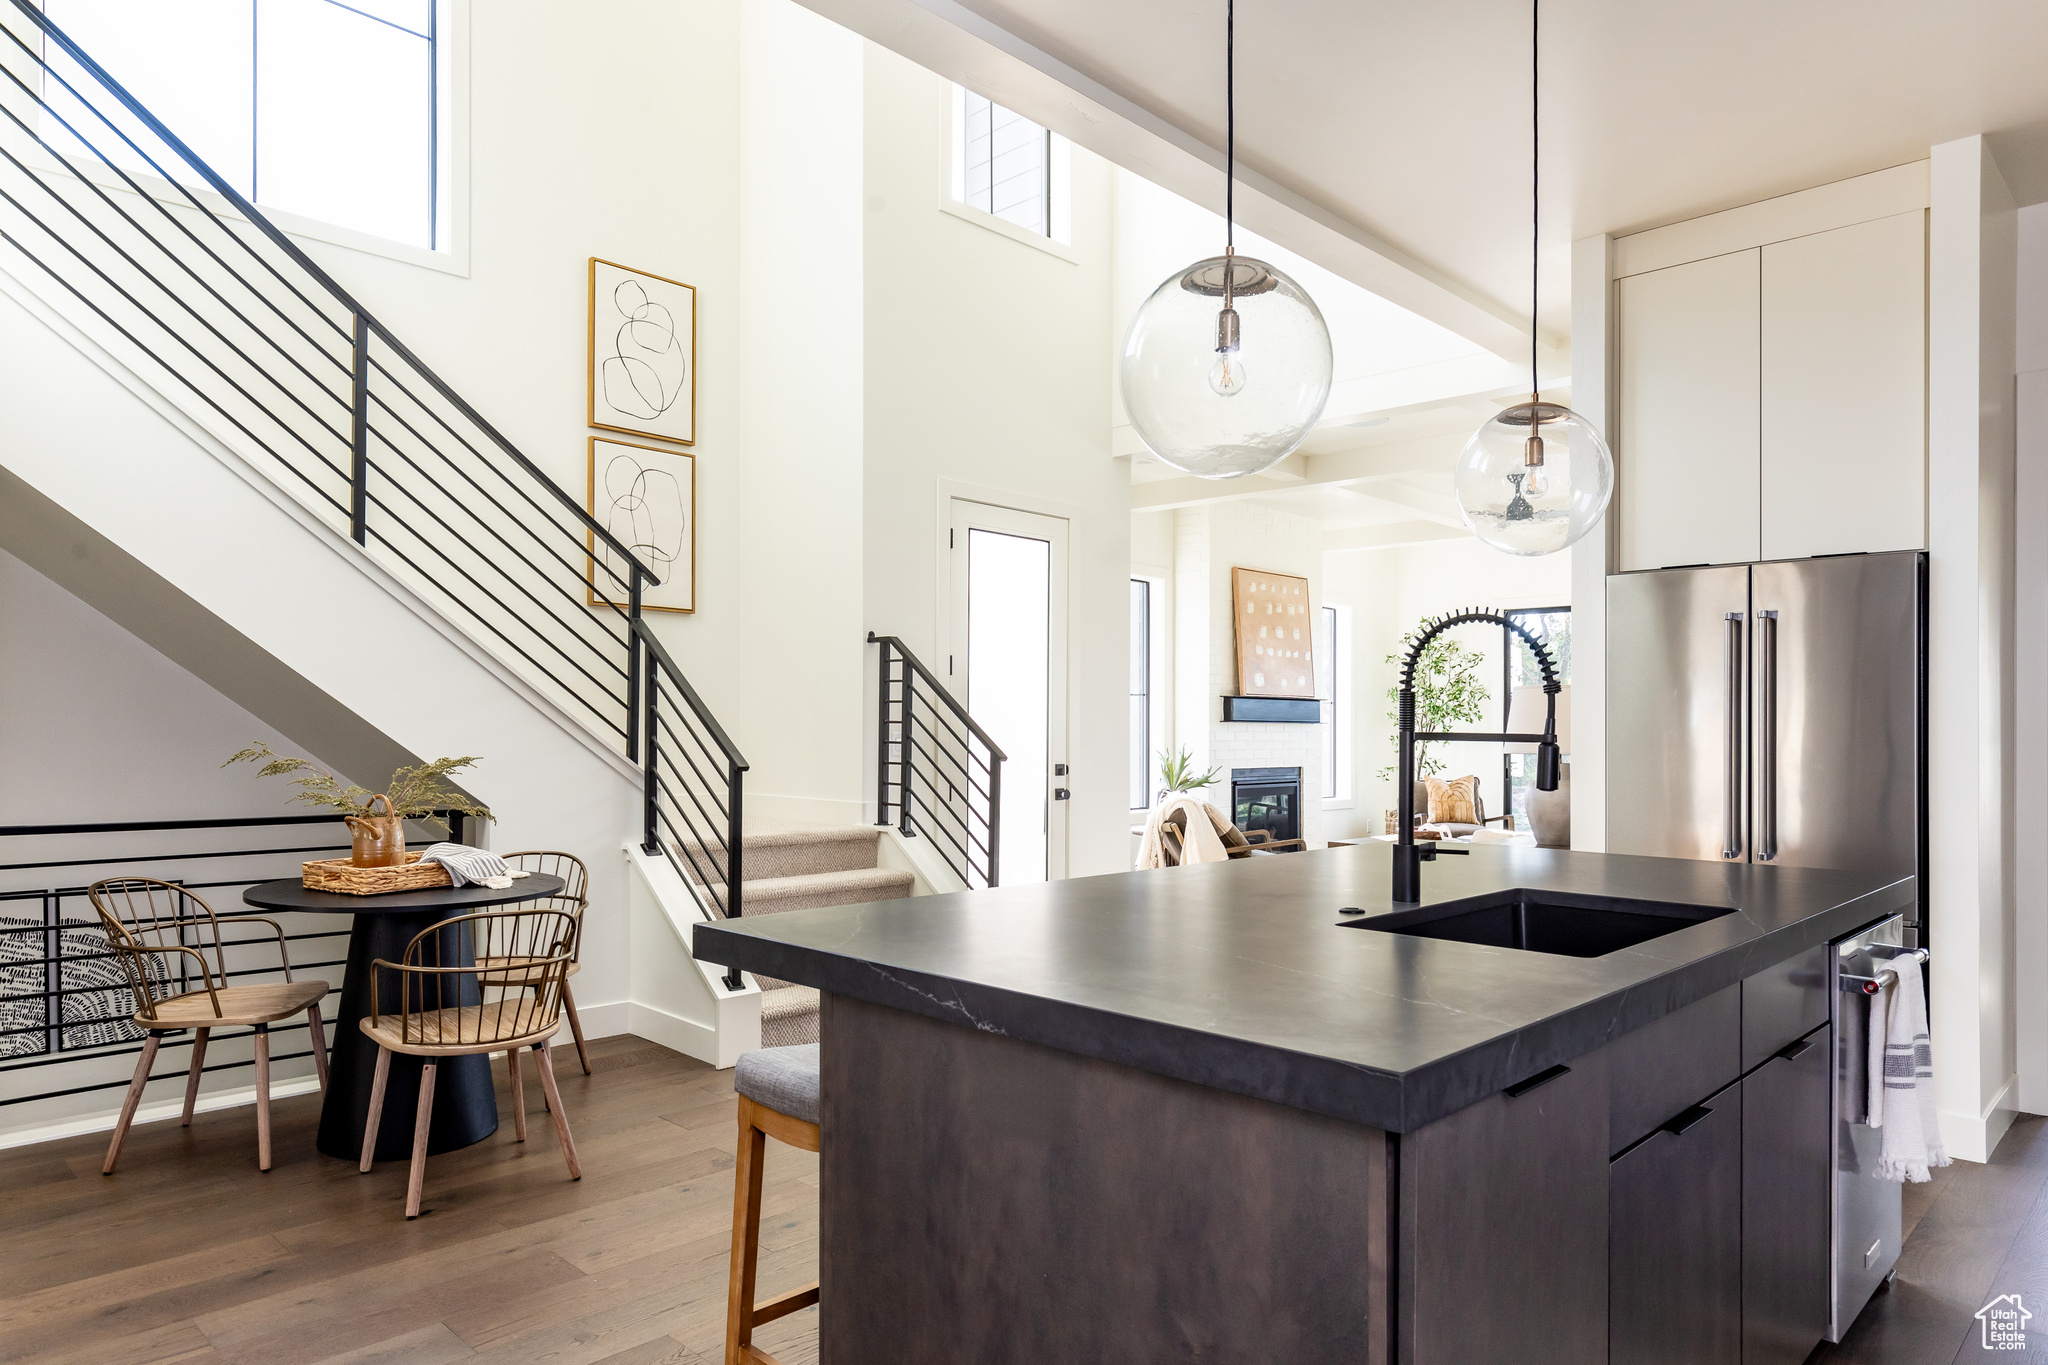 Kitchen featuring dark brown cabinetry, sink, decorative light fixtures, dark hardwood / wood-style flooring, and high quality fridge